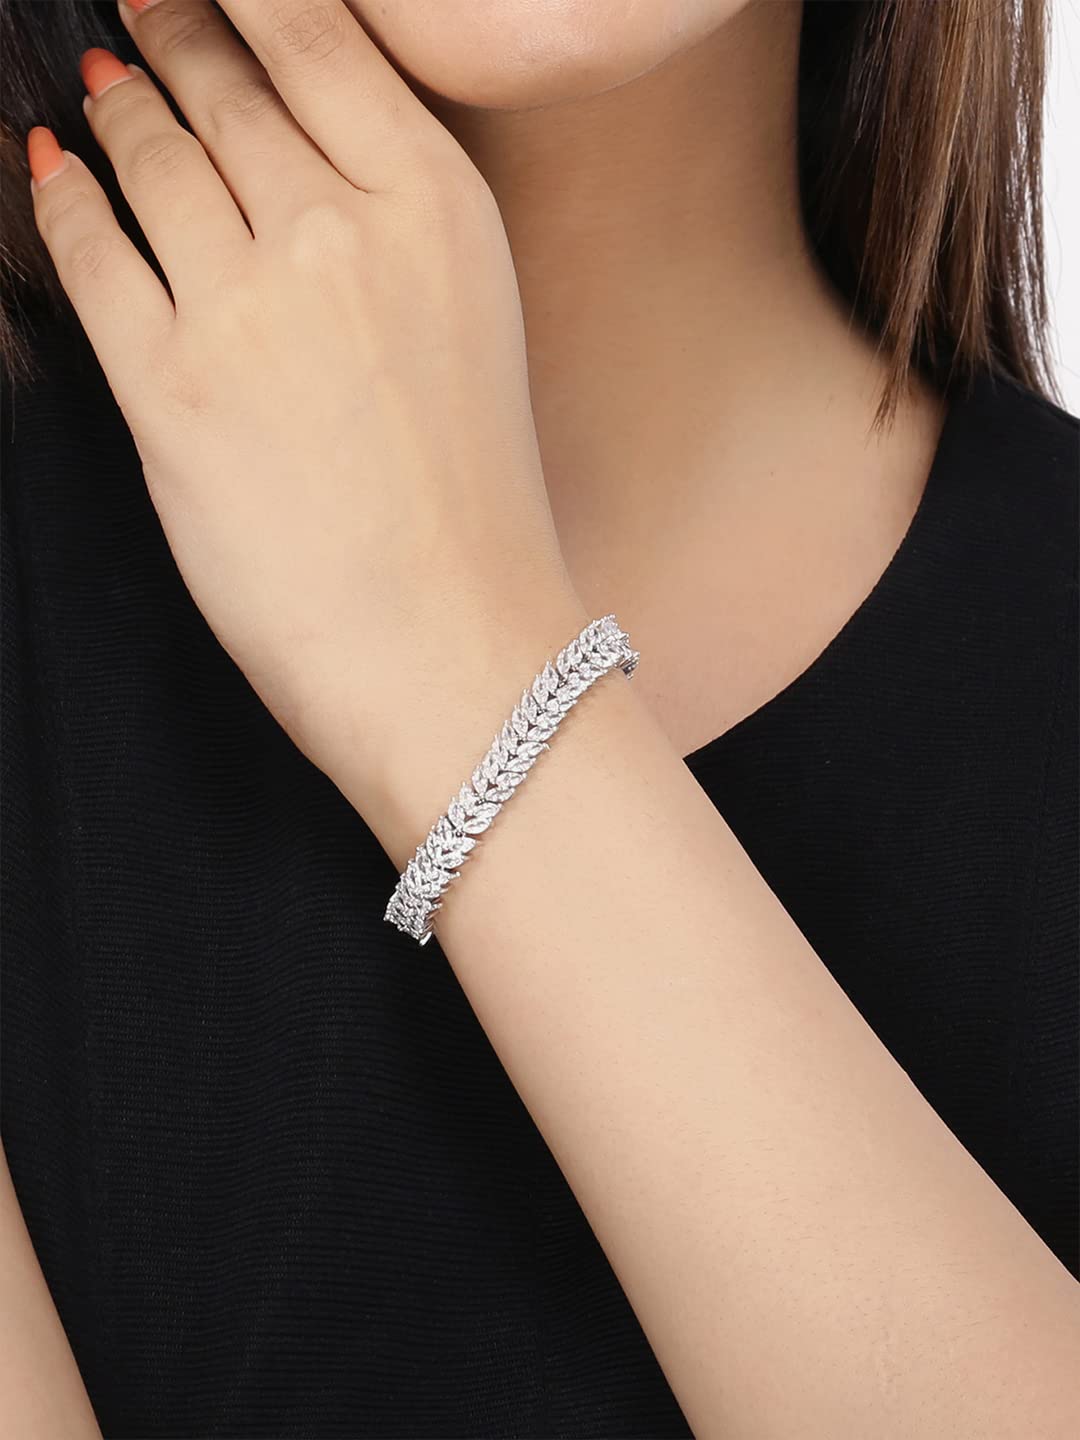 Dangling Charm Bracelets | Gold bracelet for girl, Gold bracelet for women,  Jewelry accessories ideas